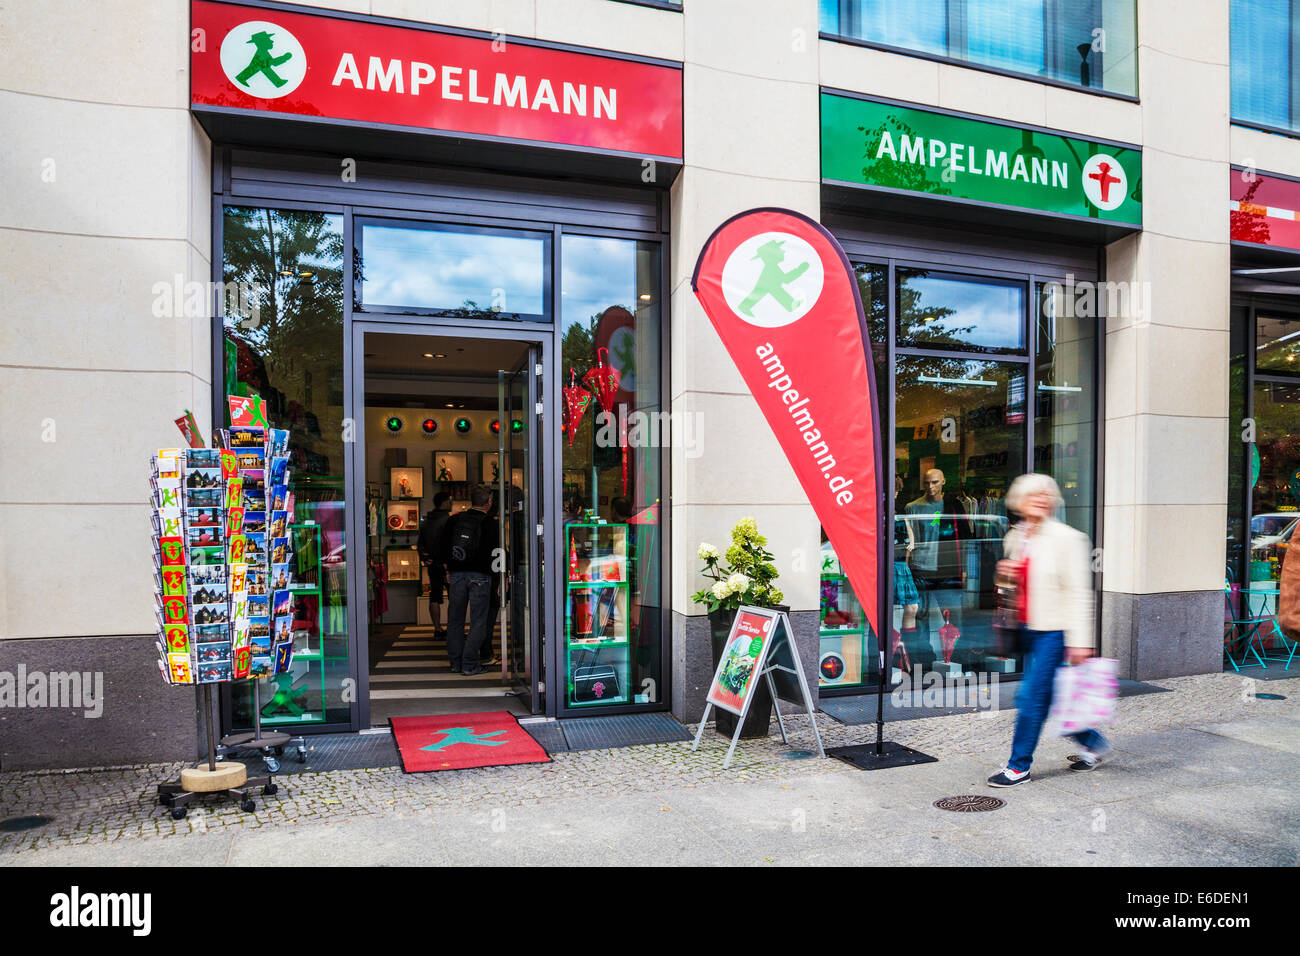 An Ampelmann souvenir shop in Berlin. Stock Photo